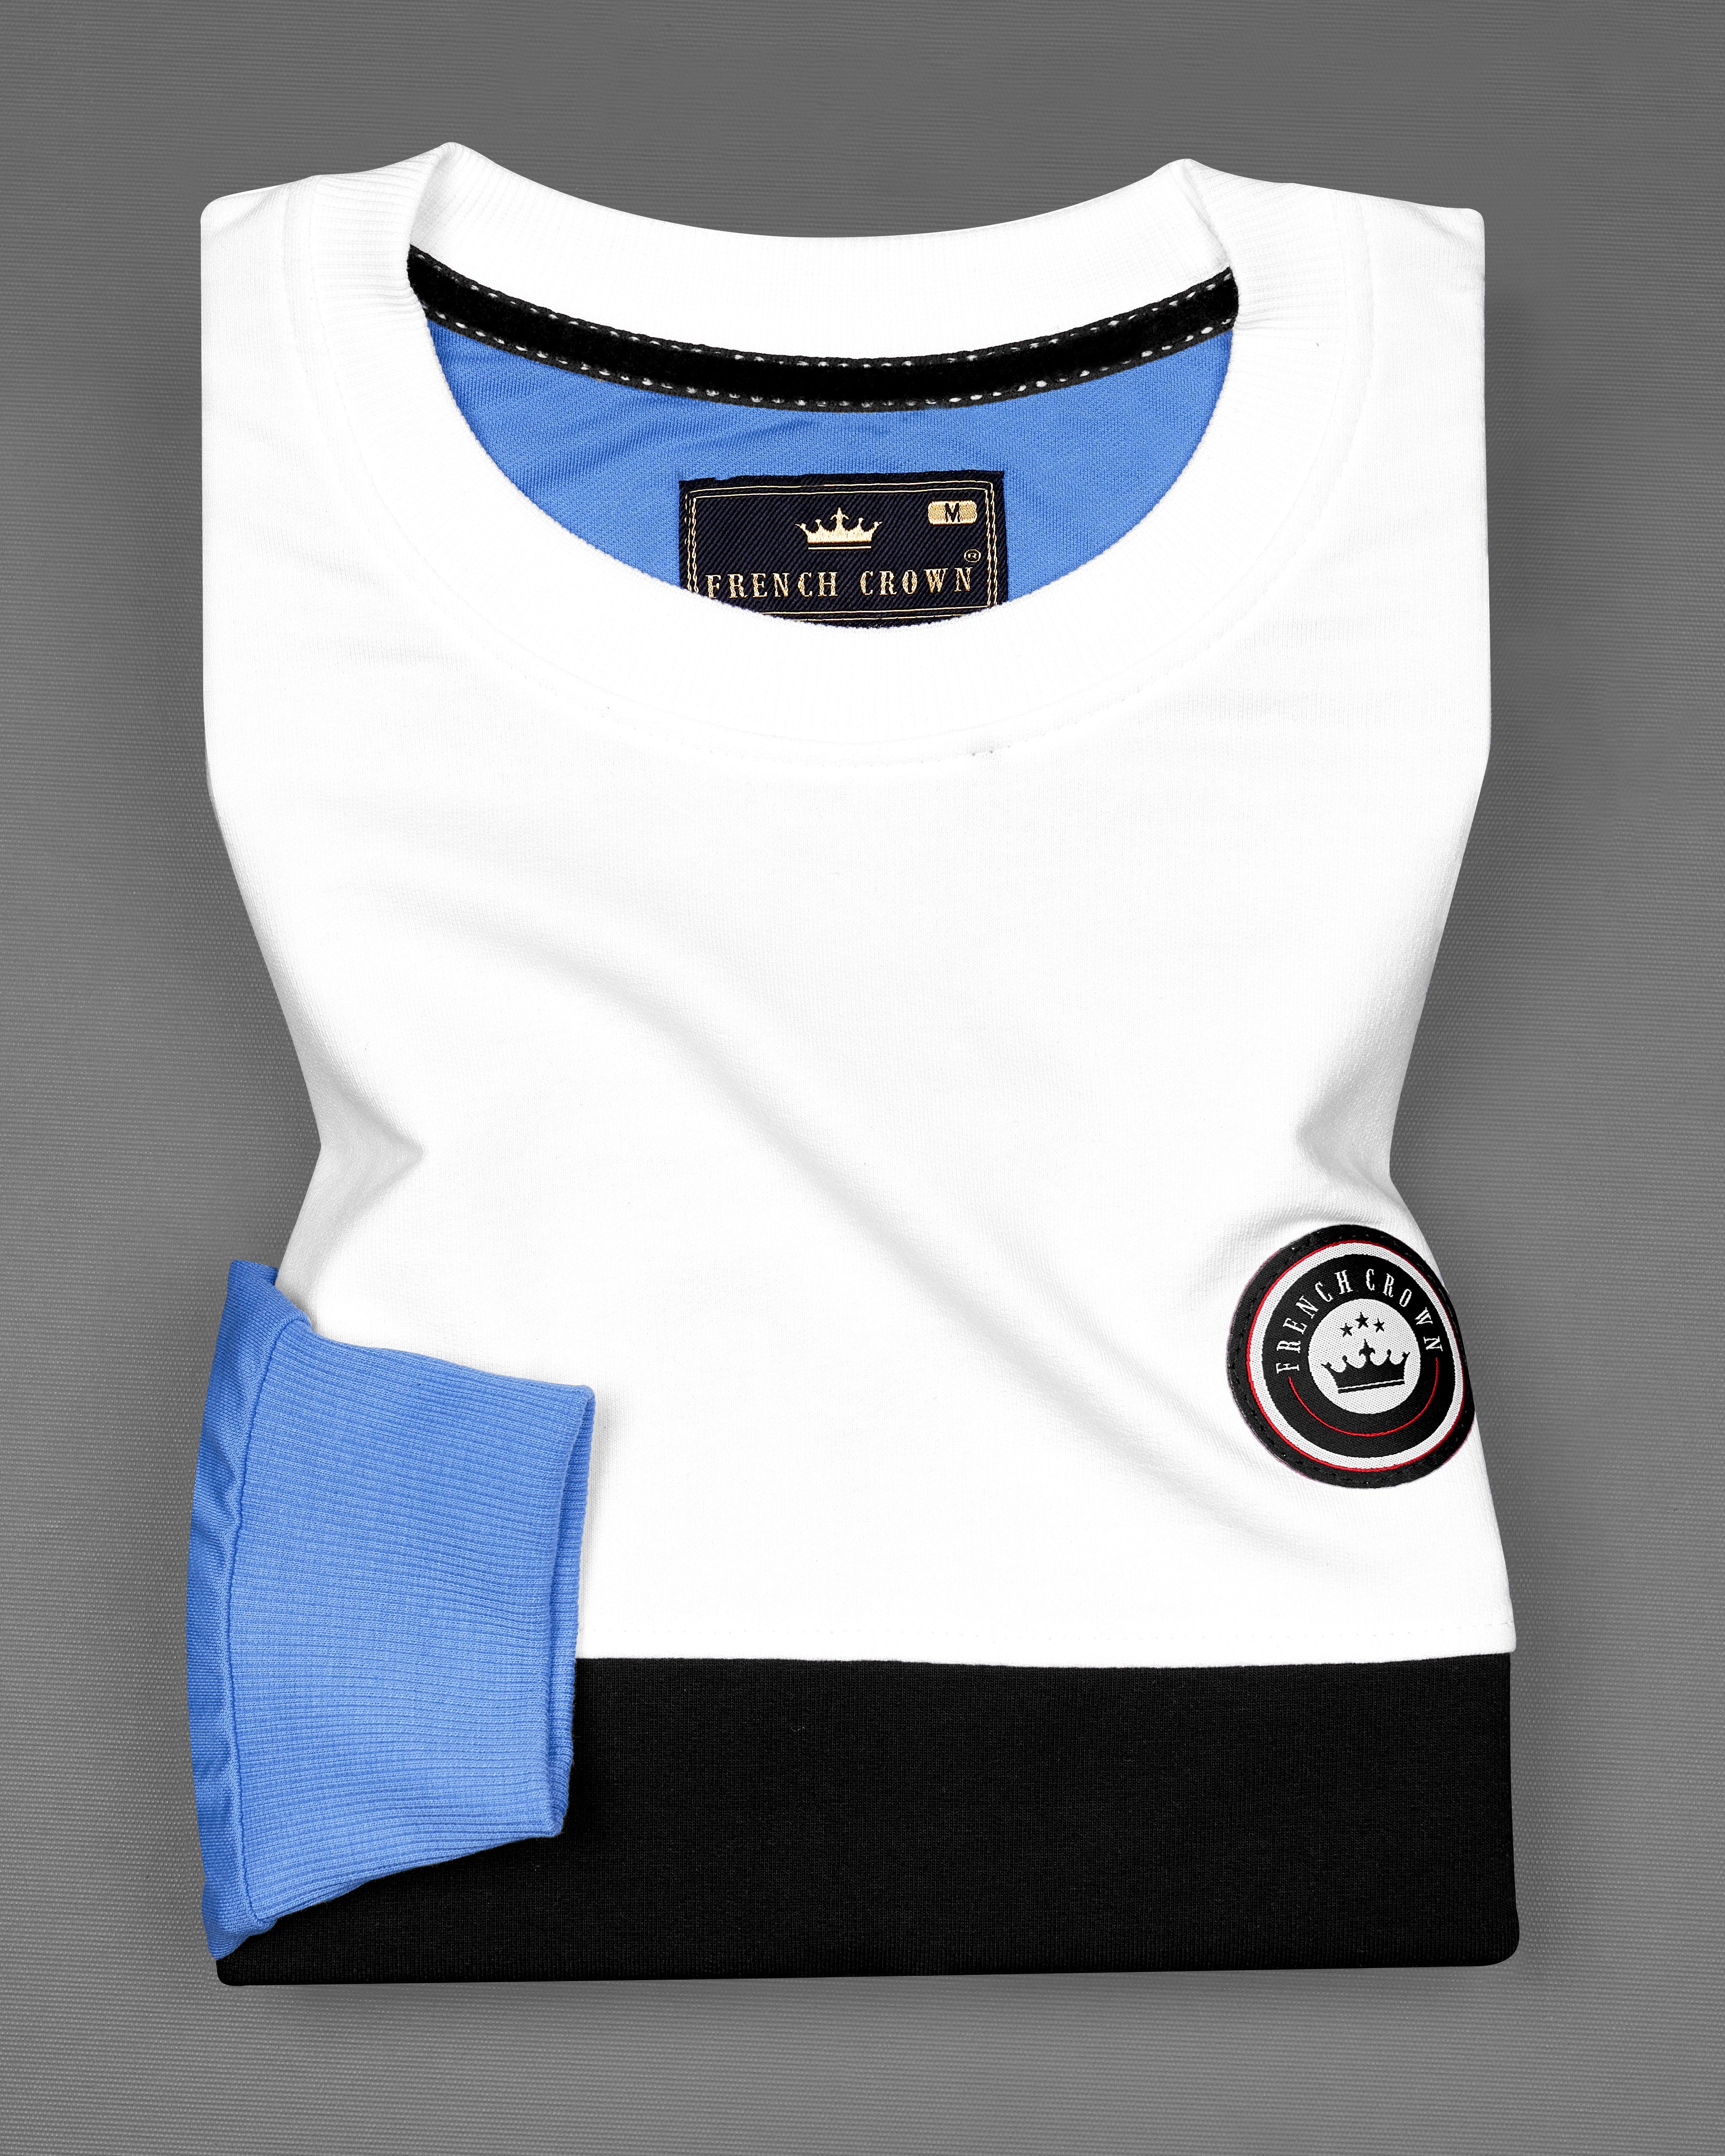 Moonstone Blue with White and Black Block Pattern Pique Sweatshirt TS666-S, TS666-M, TS666-L, TS666-XL, TS666-XXL